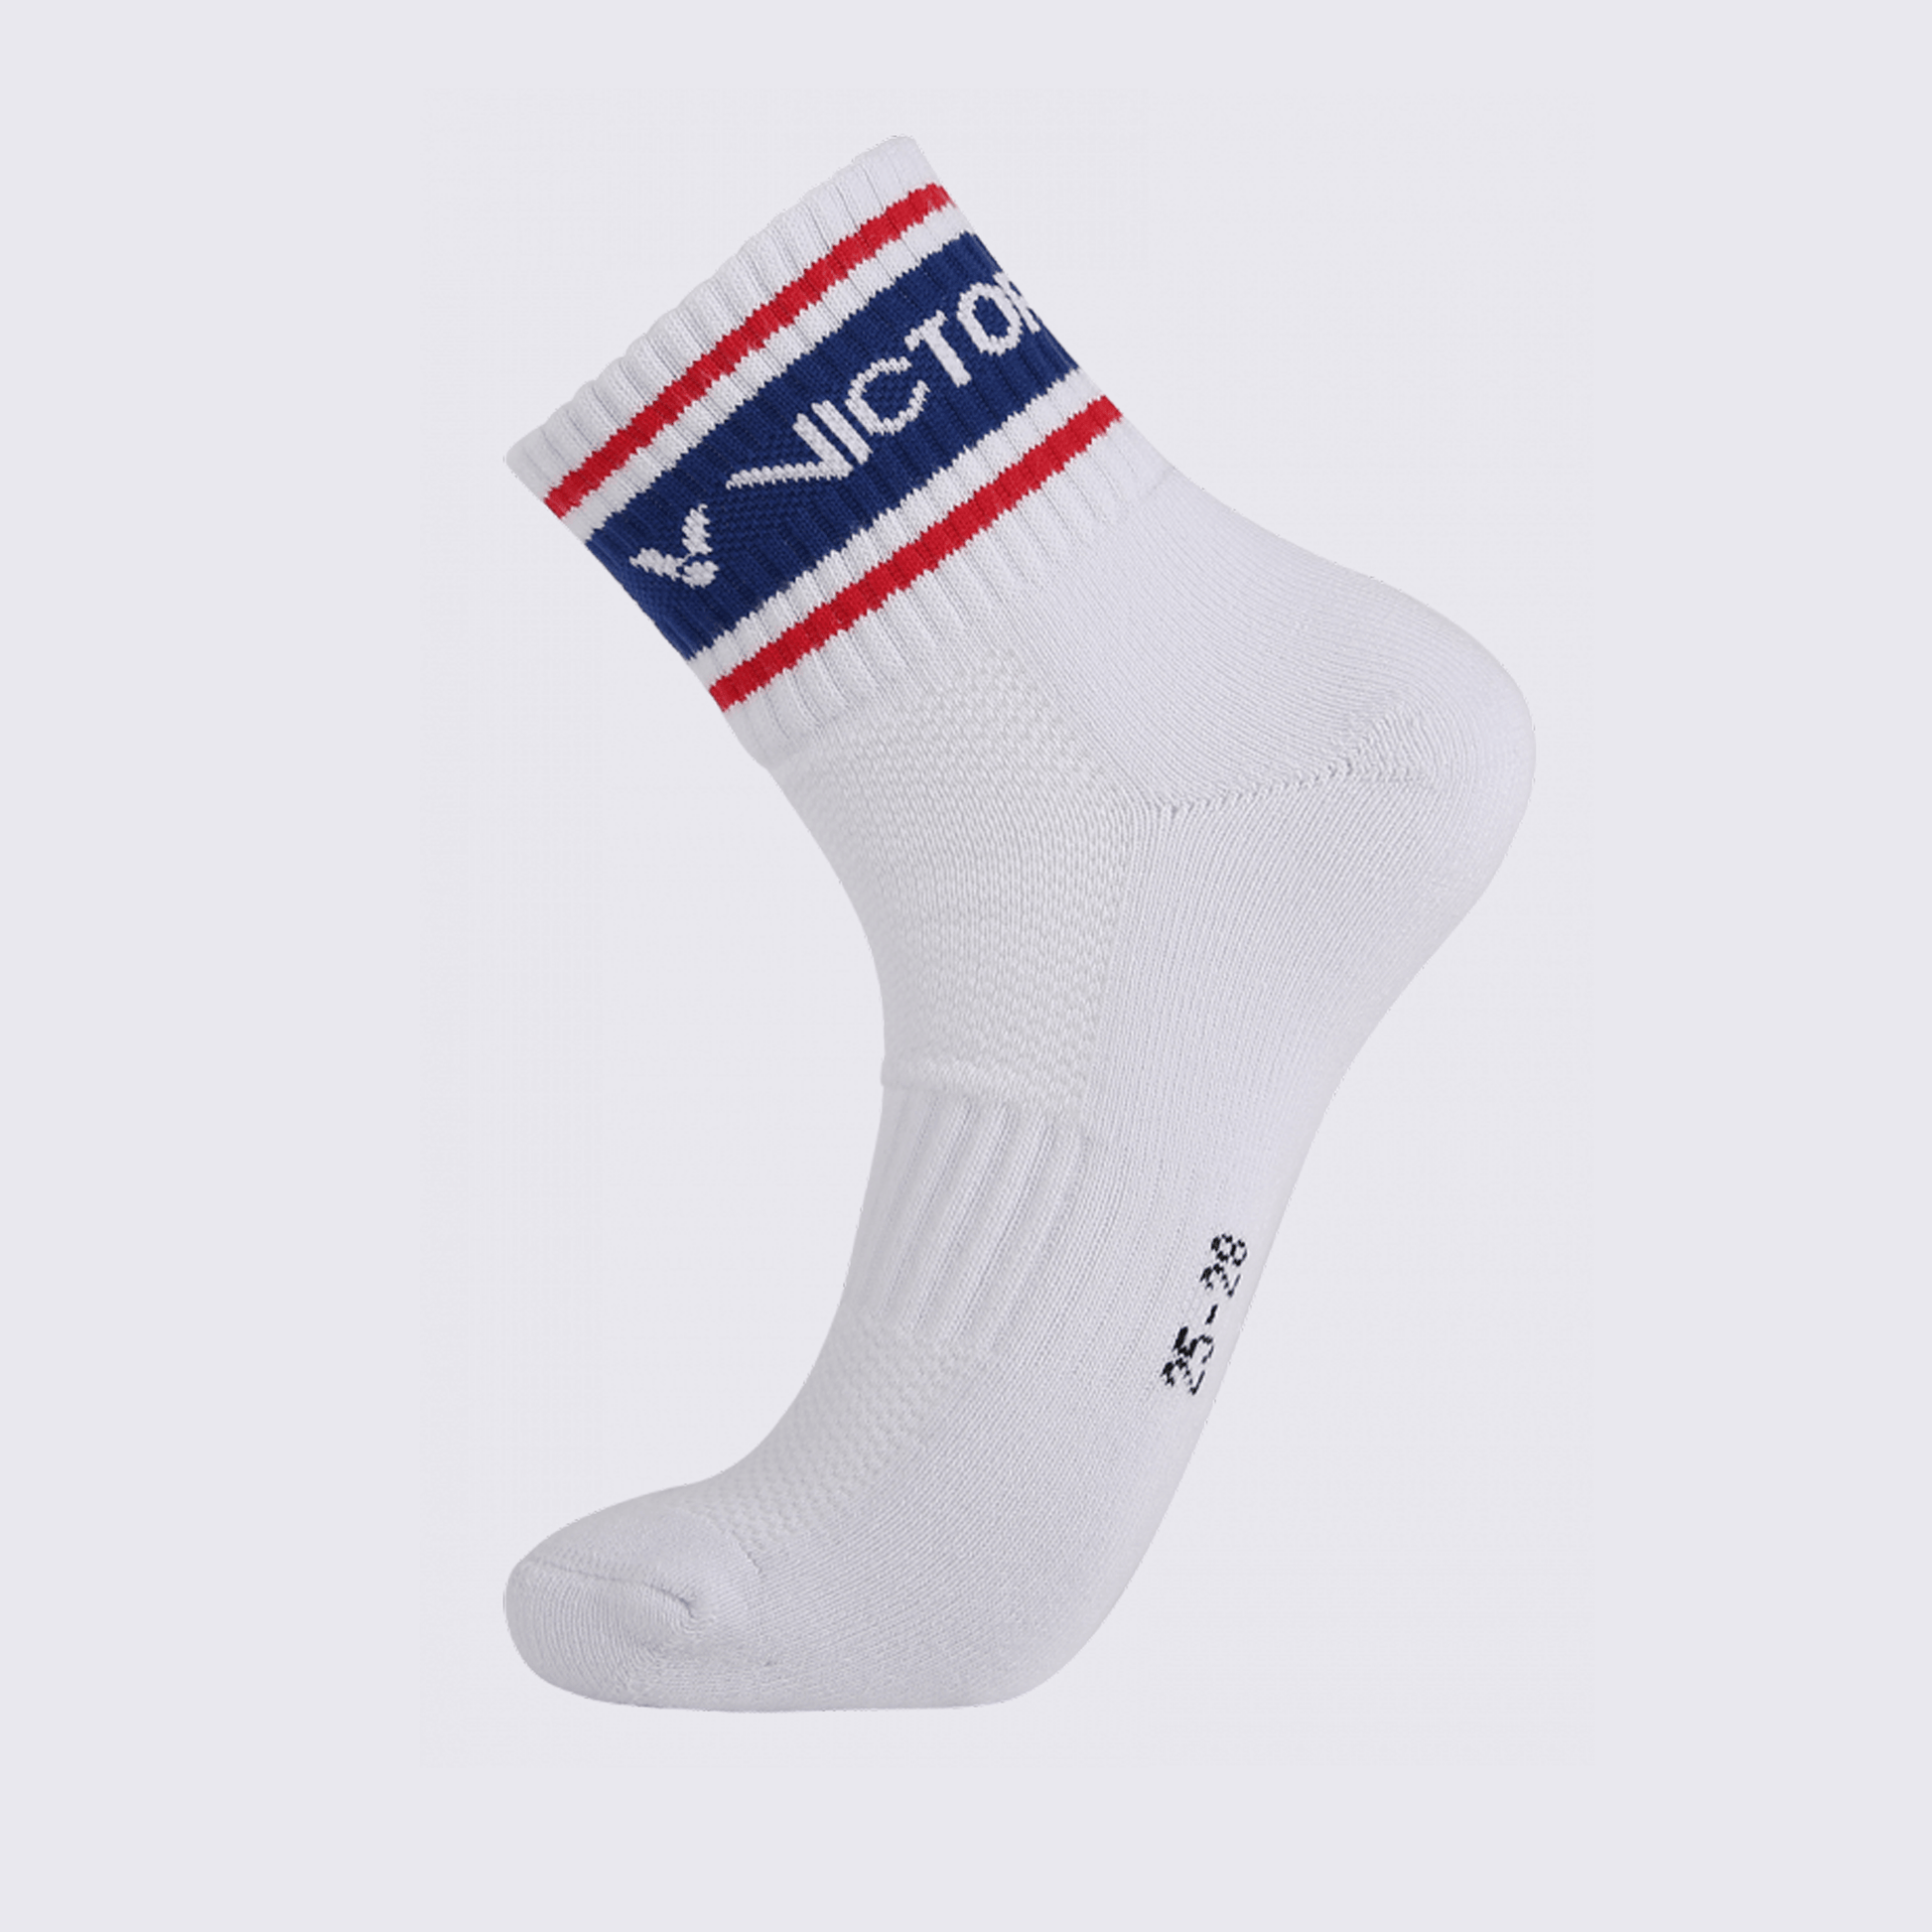 Victor Men's Sports Socks SK156F (Blue)